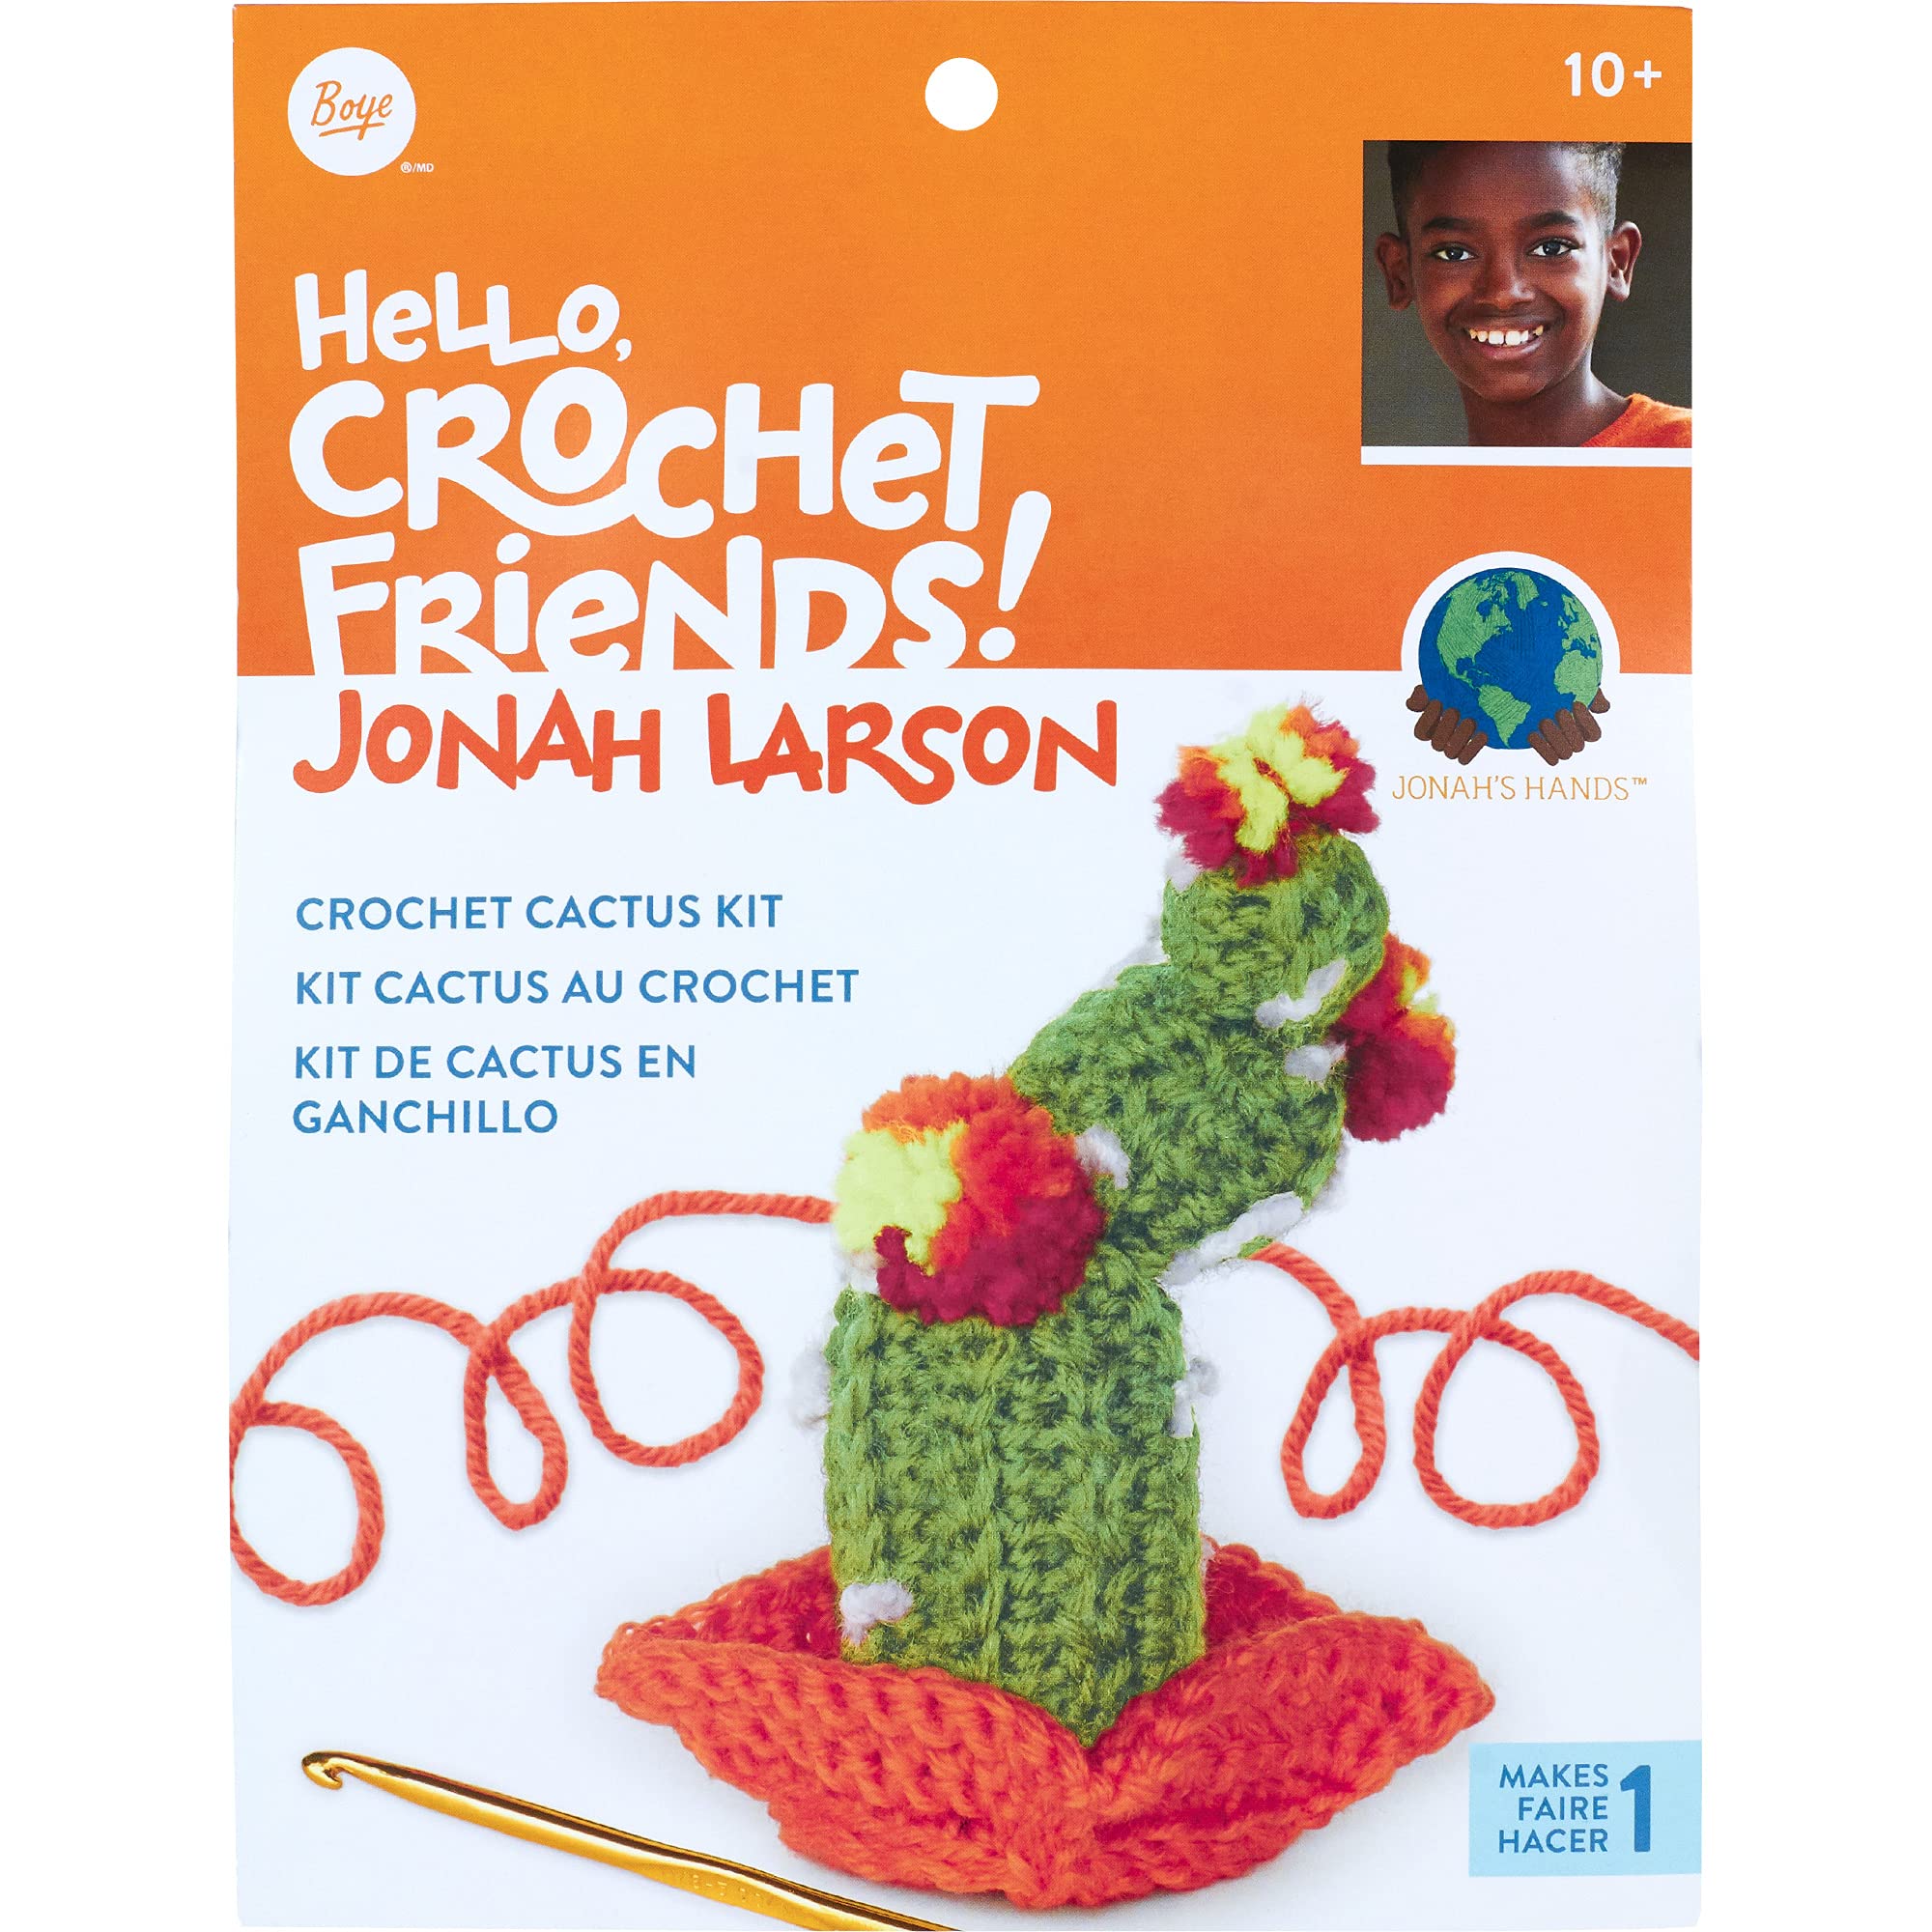 Jonah's Hands Crochet Rainbow Kit